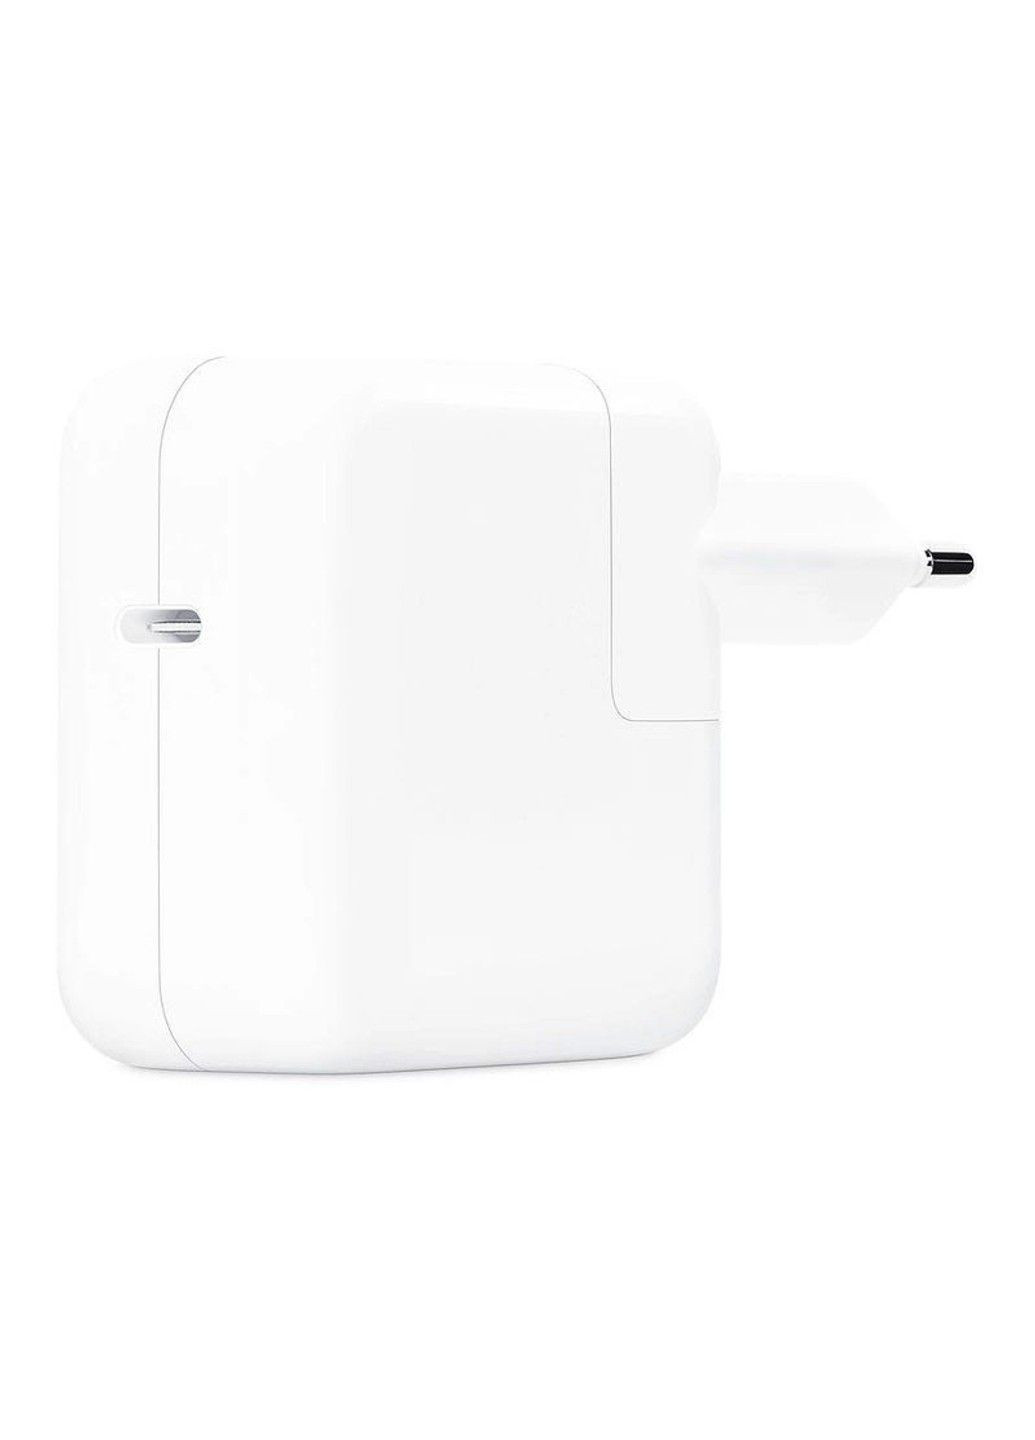 СЗУ 30W USB-C Power Adapter for Apple (AAA) (box) Brand_A_Class (291879246)